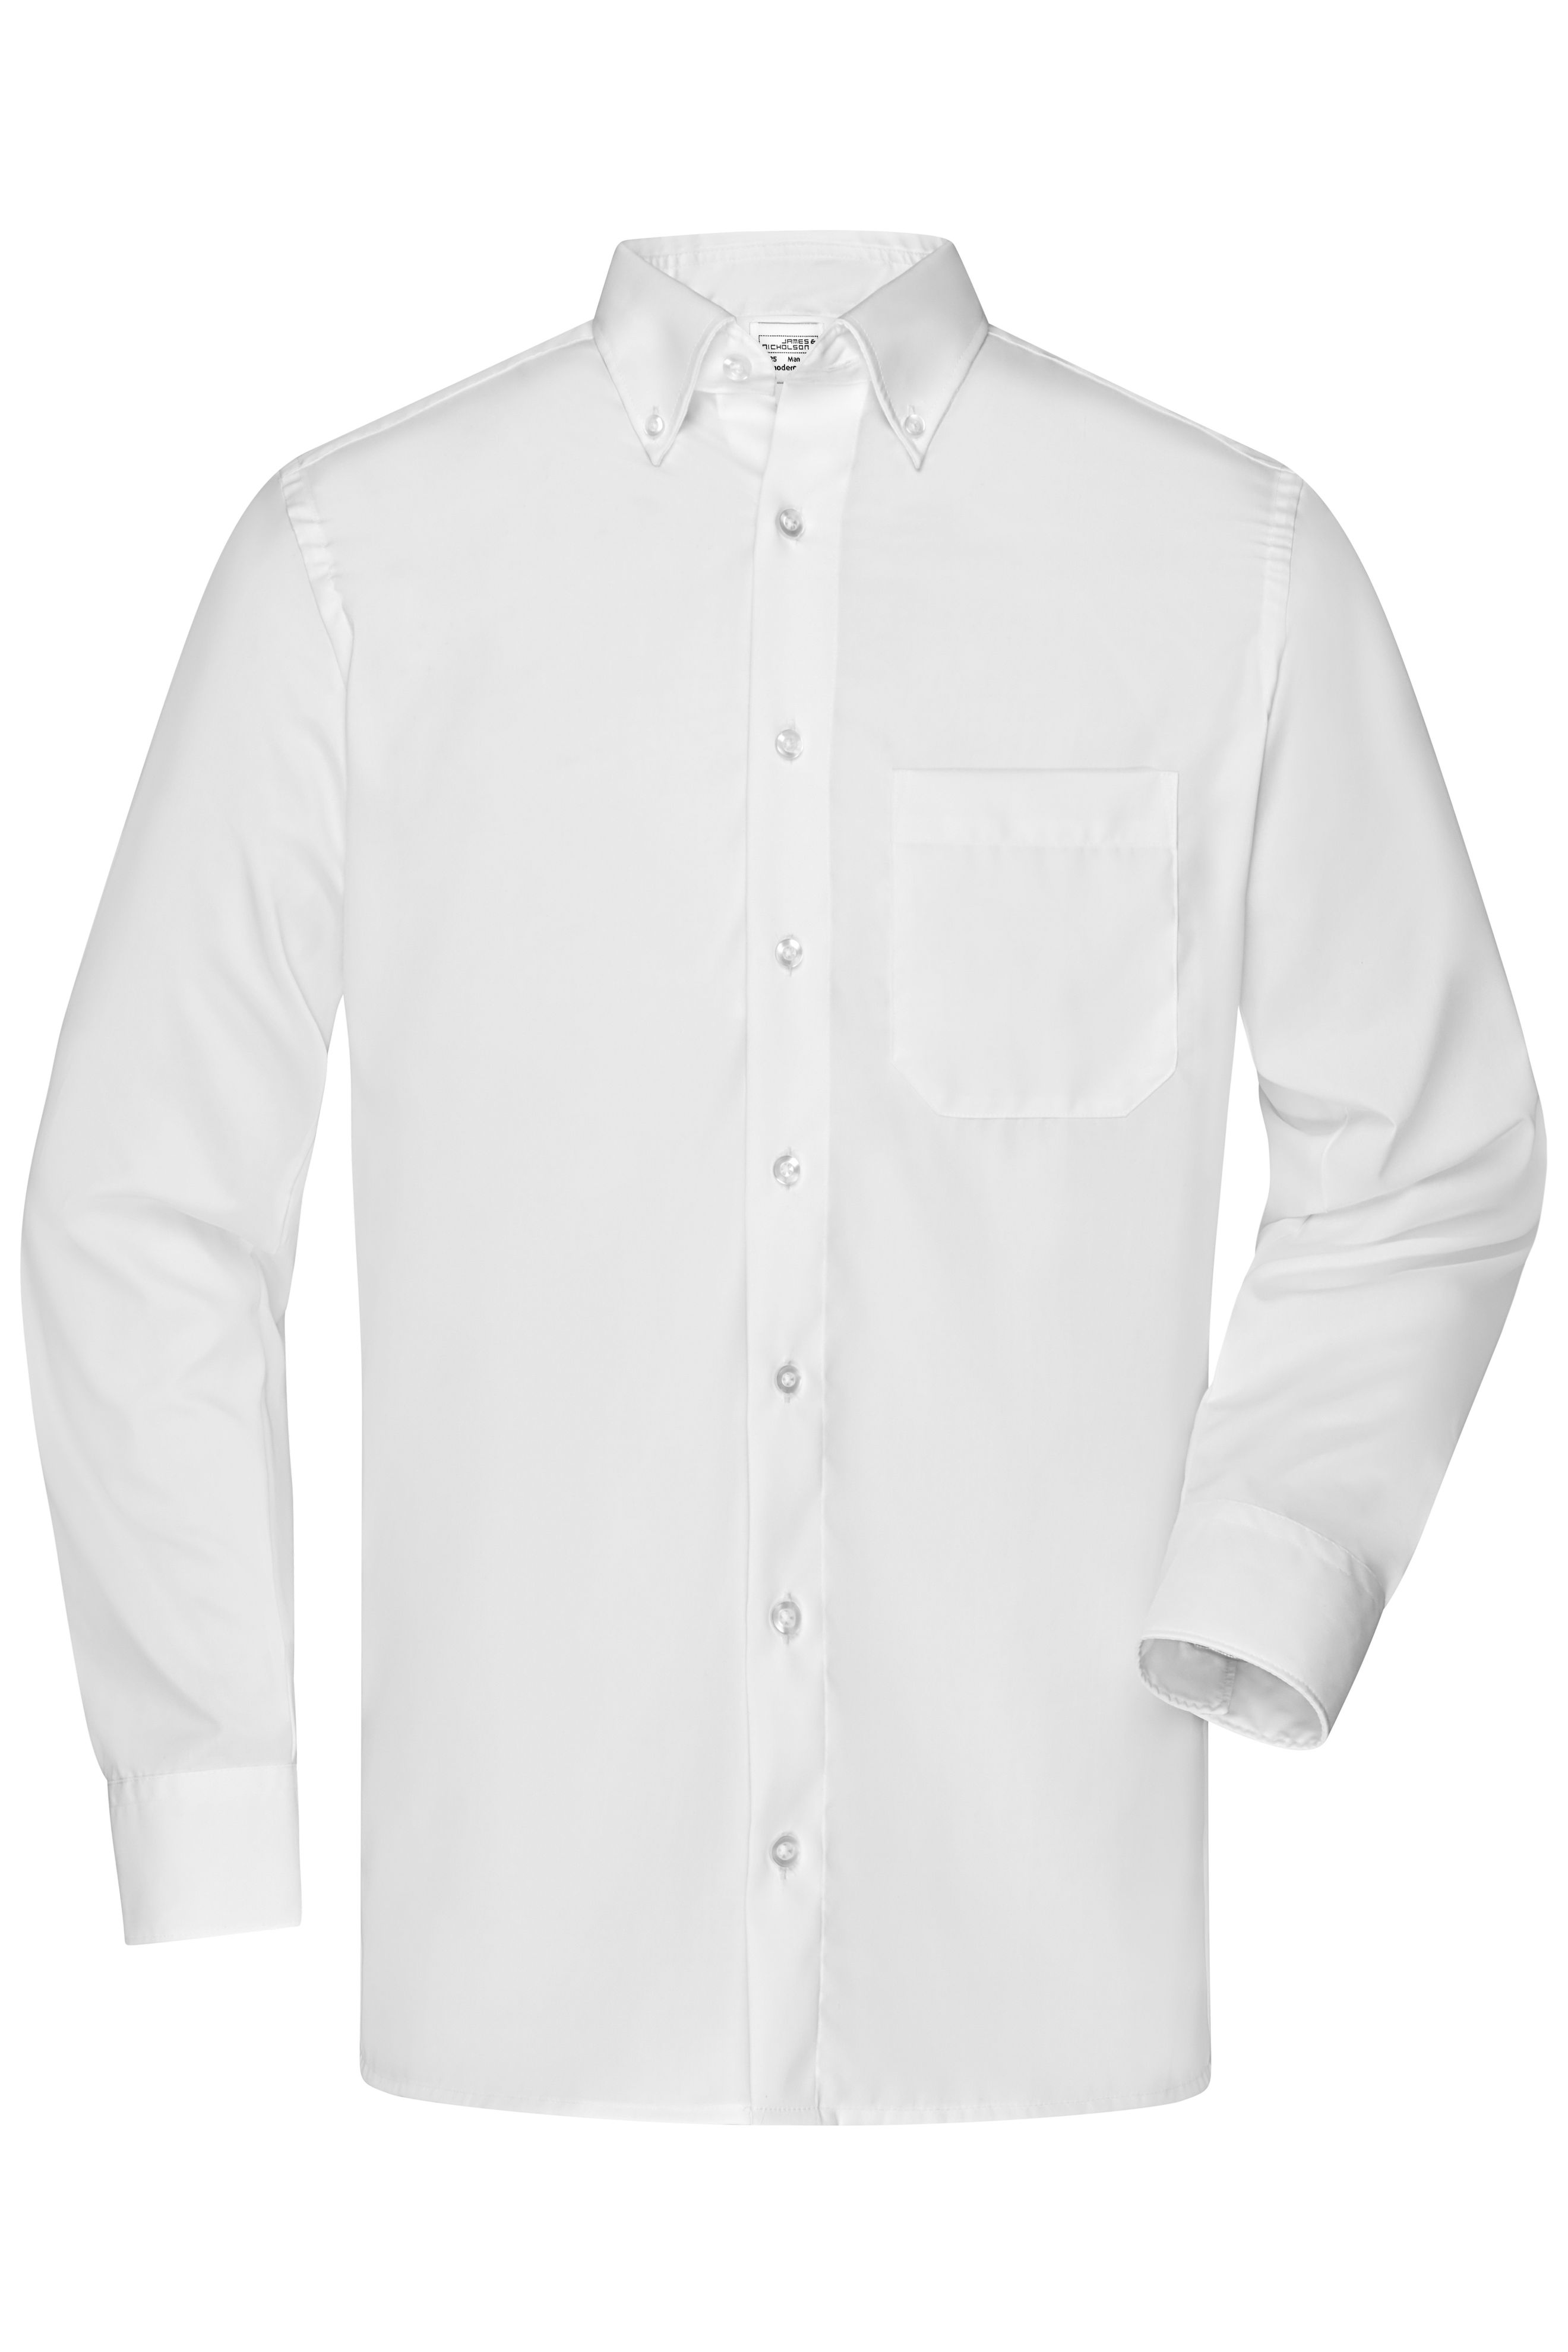 Men Men's Shirt "BUTTON DOWN" White-Daiber